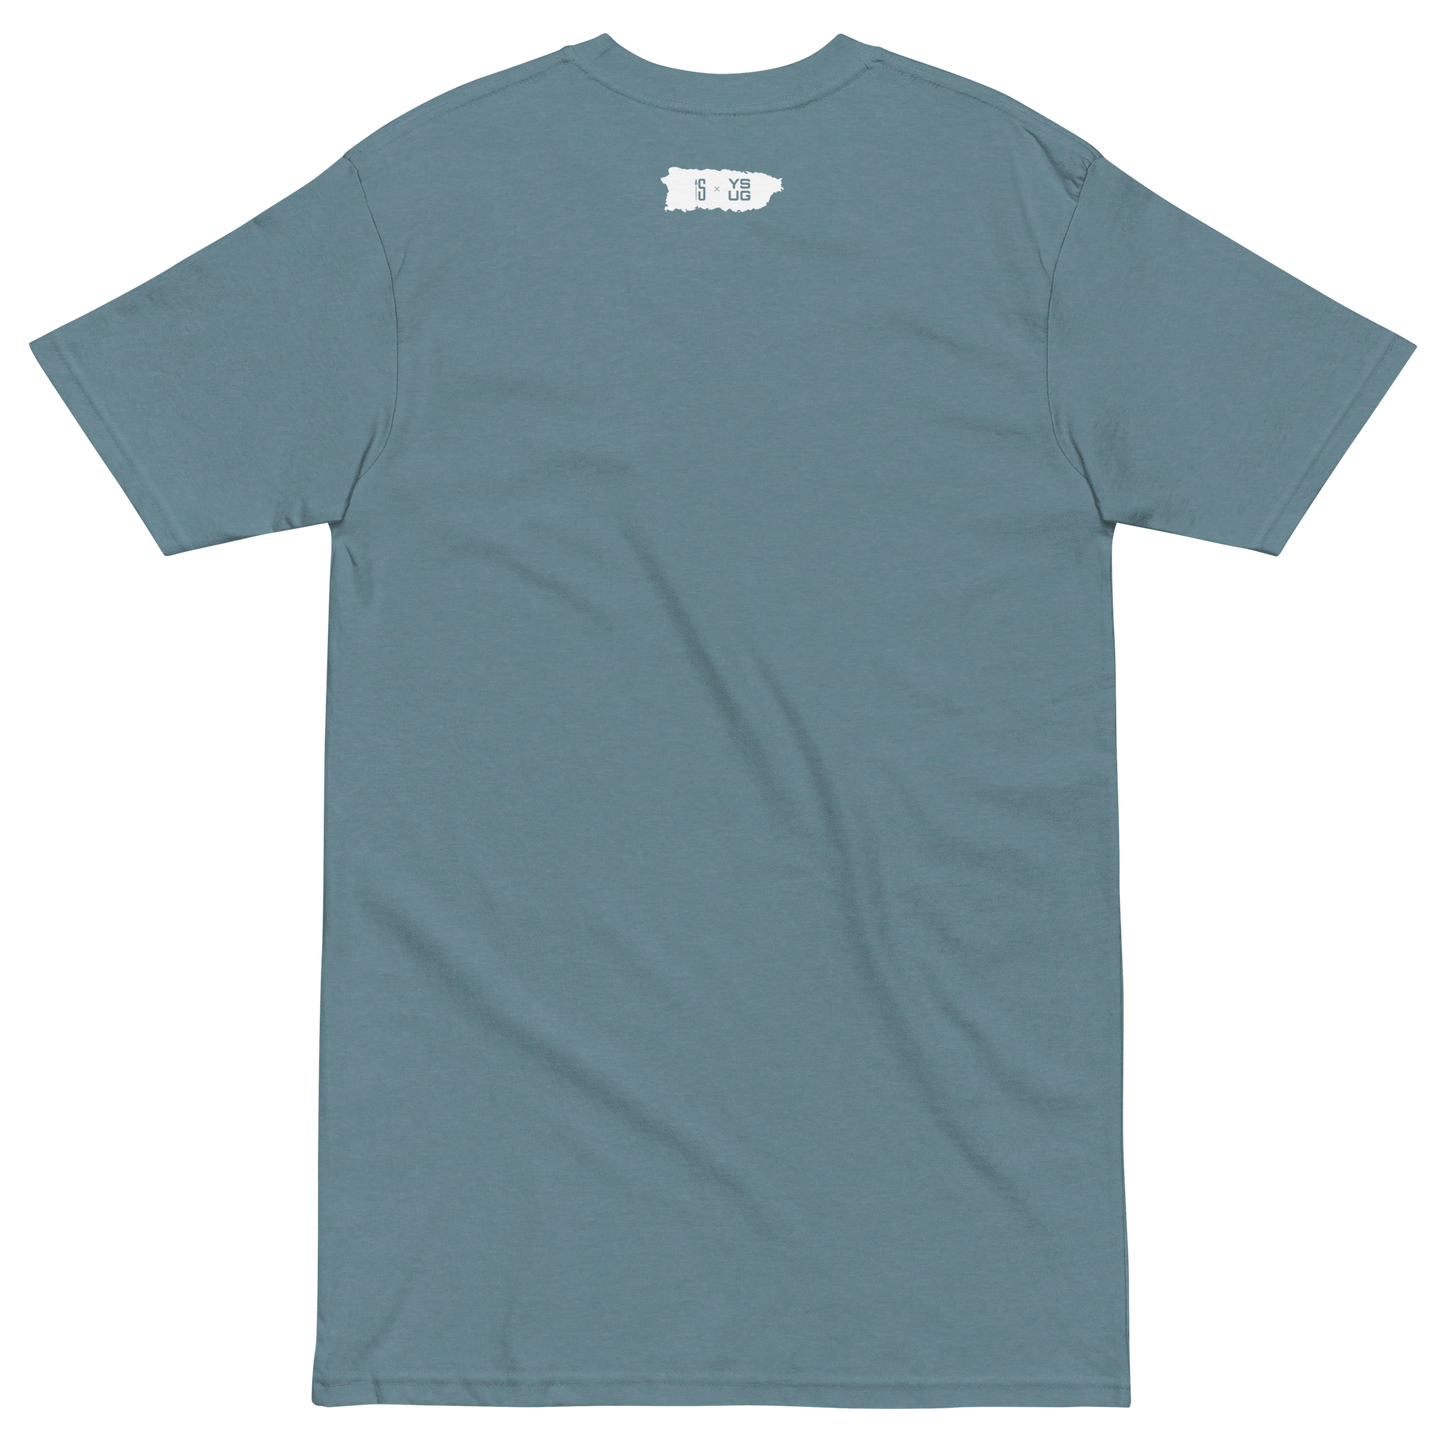 YSUG Astro - Lightside Shirt